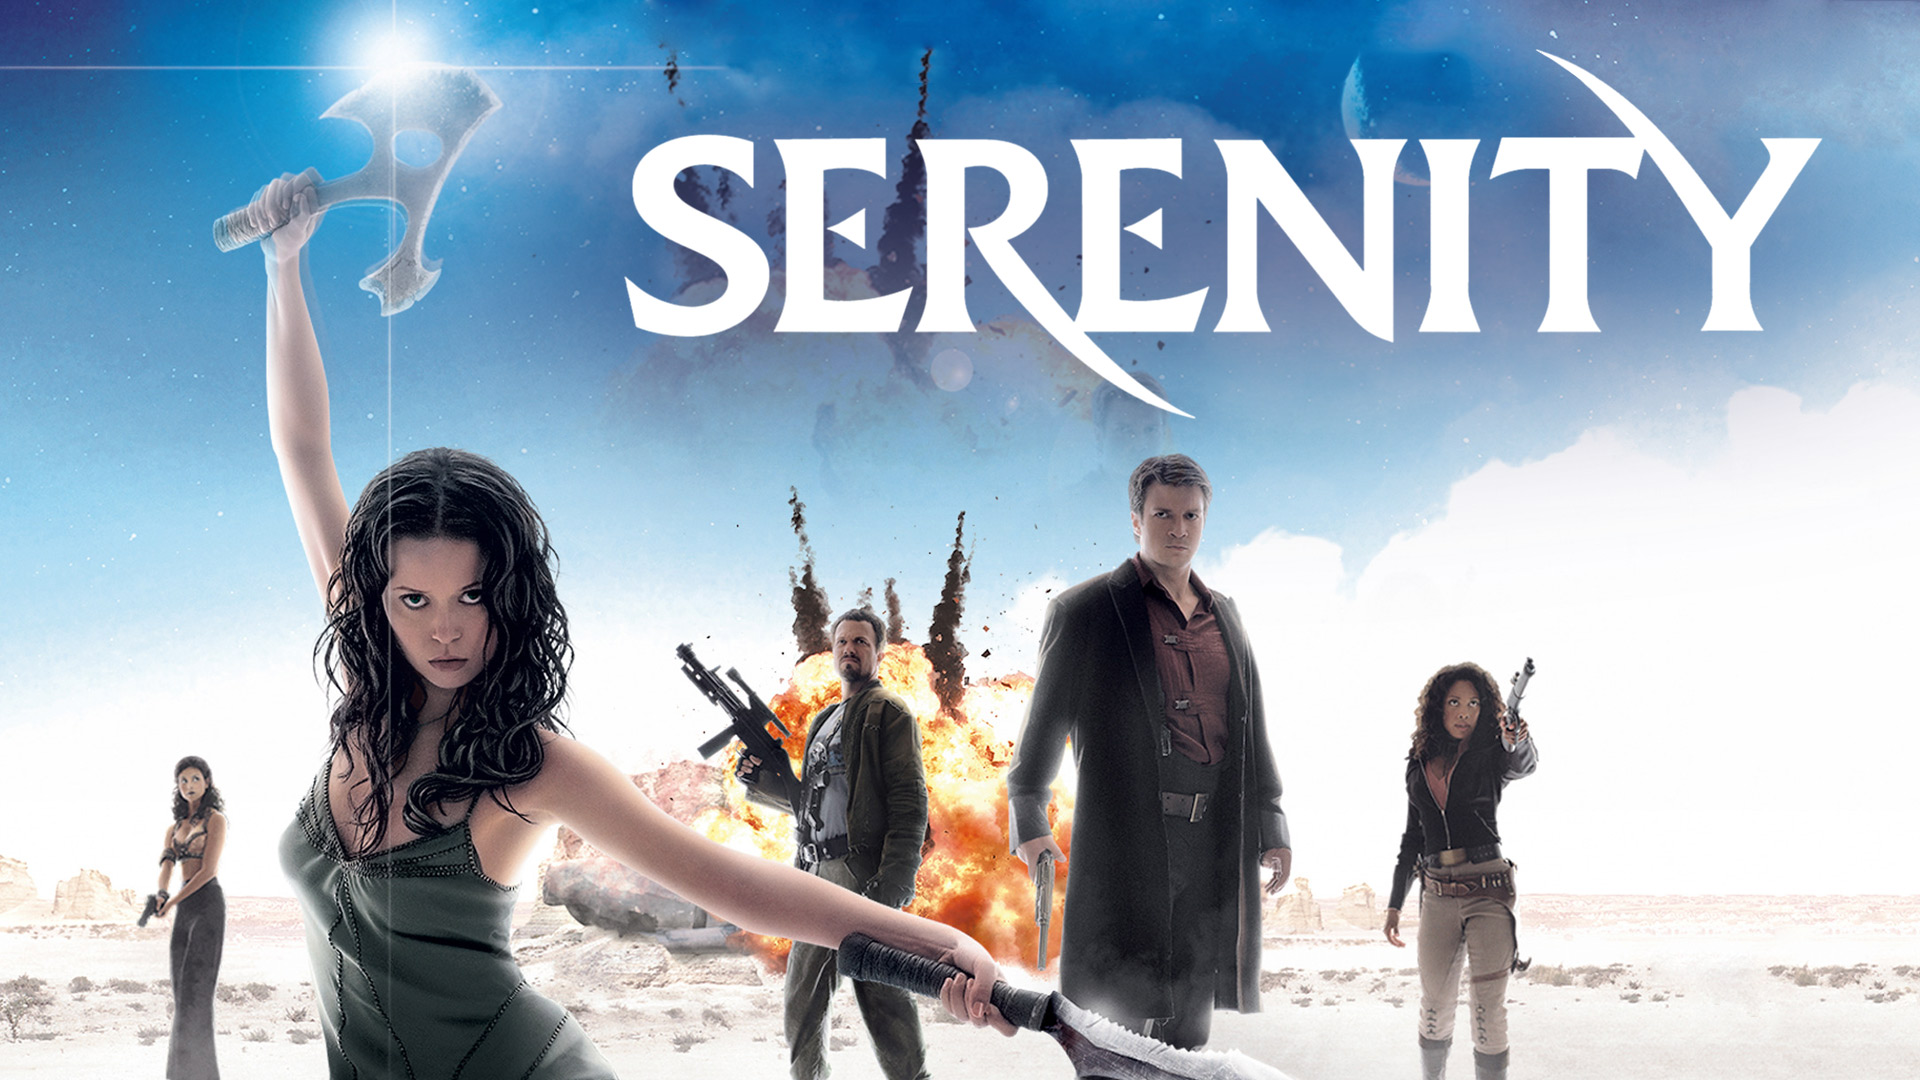 Serenity (2005)